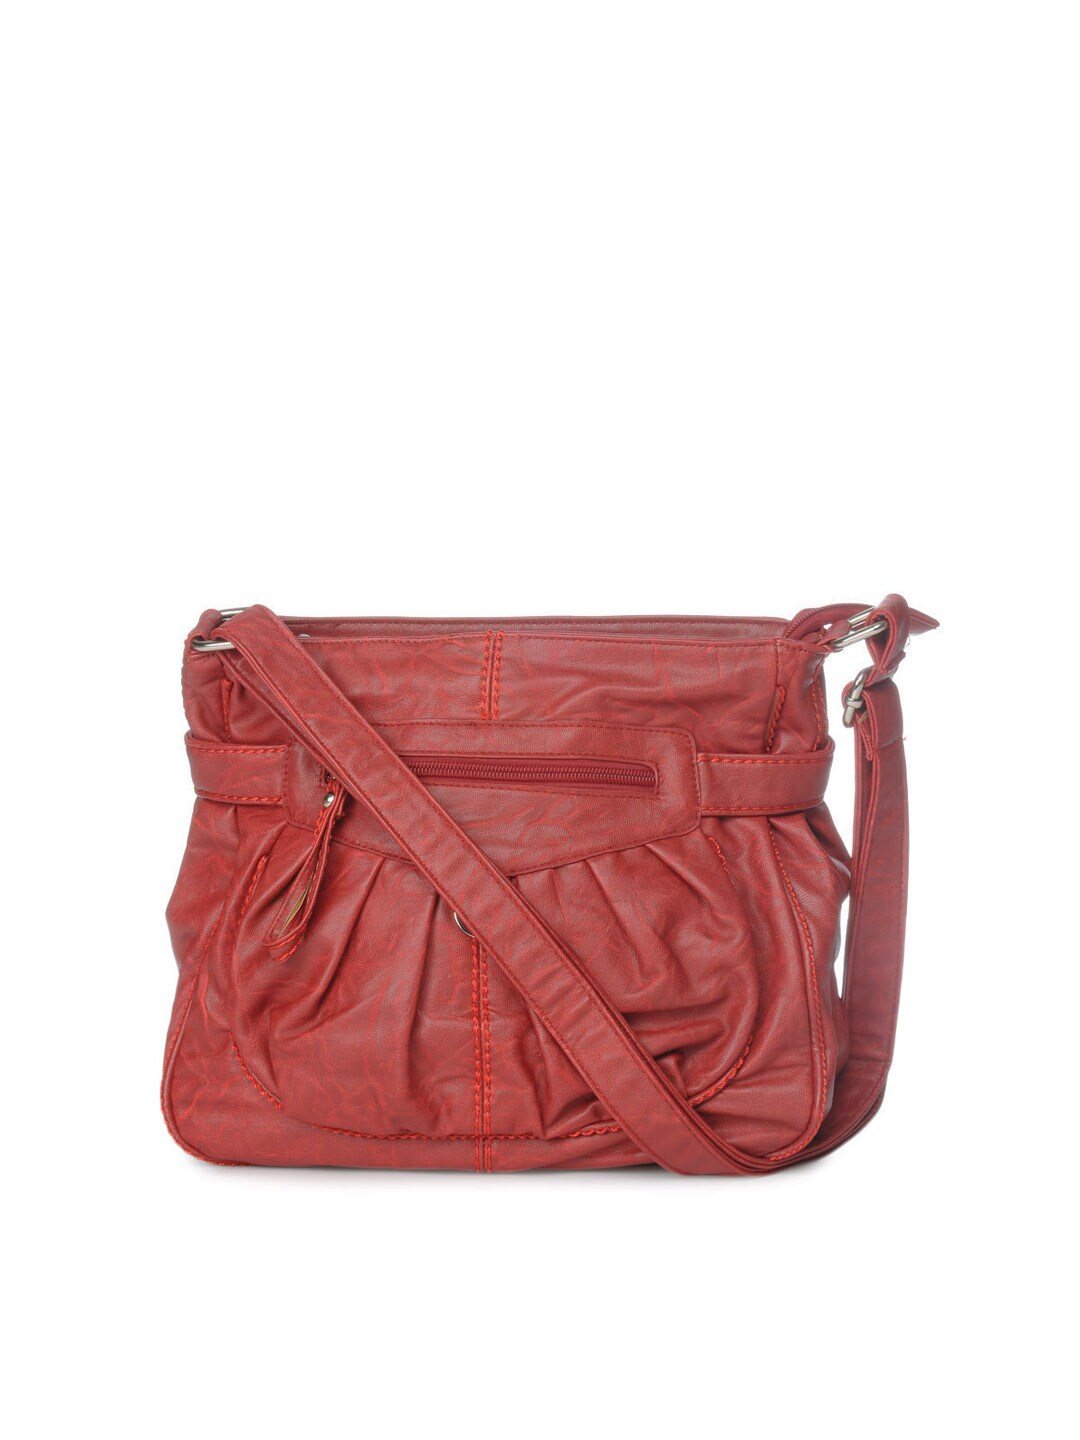 Kiara Women Red Handbag